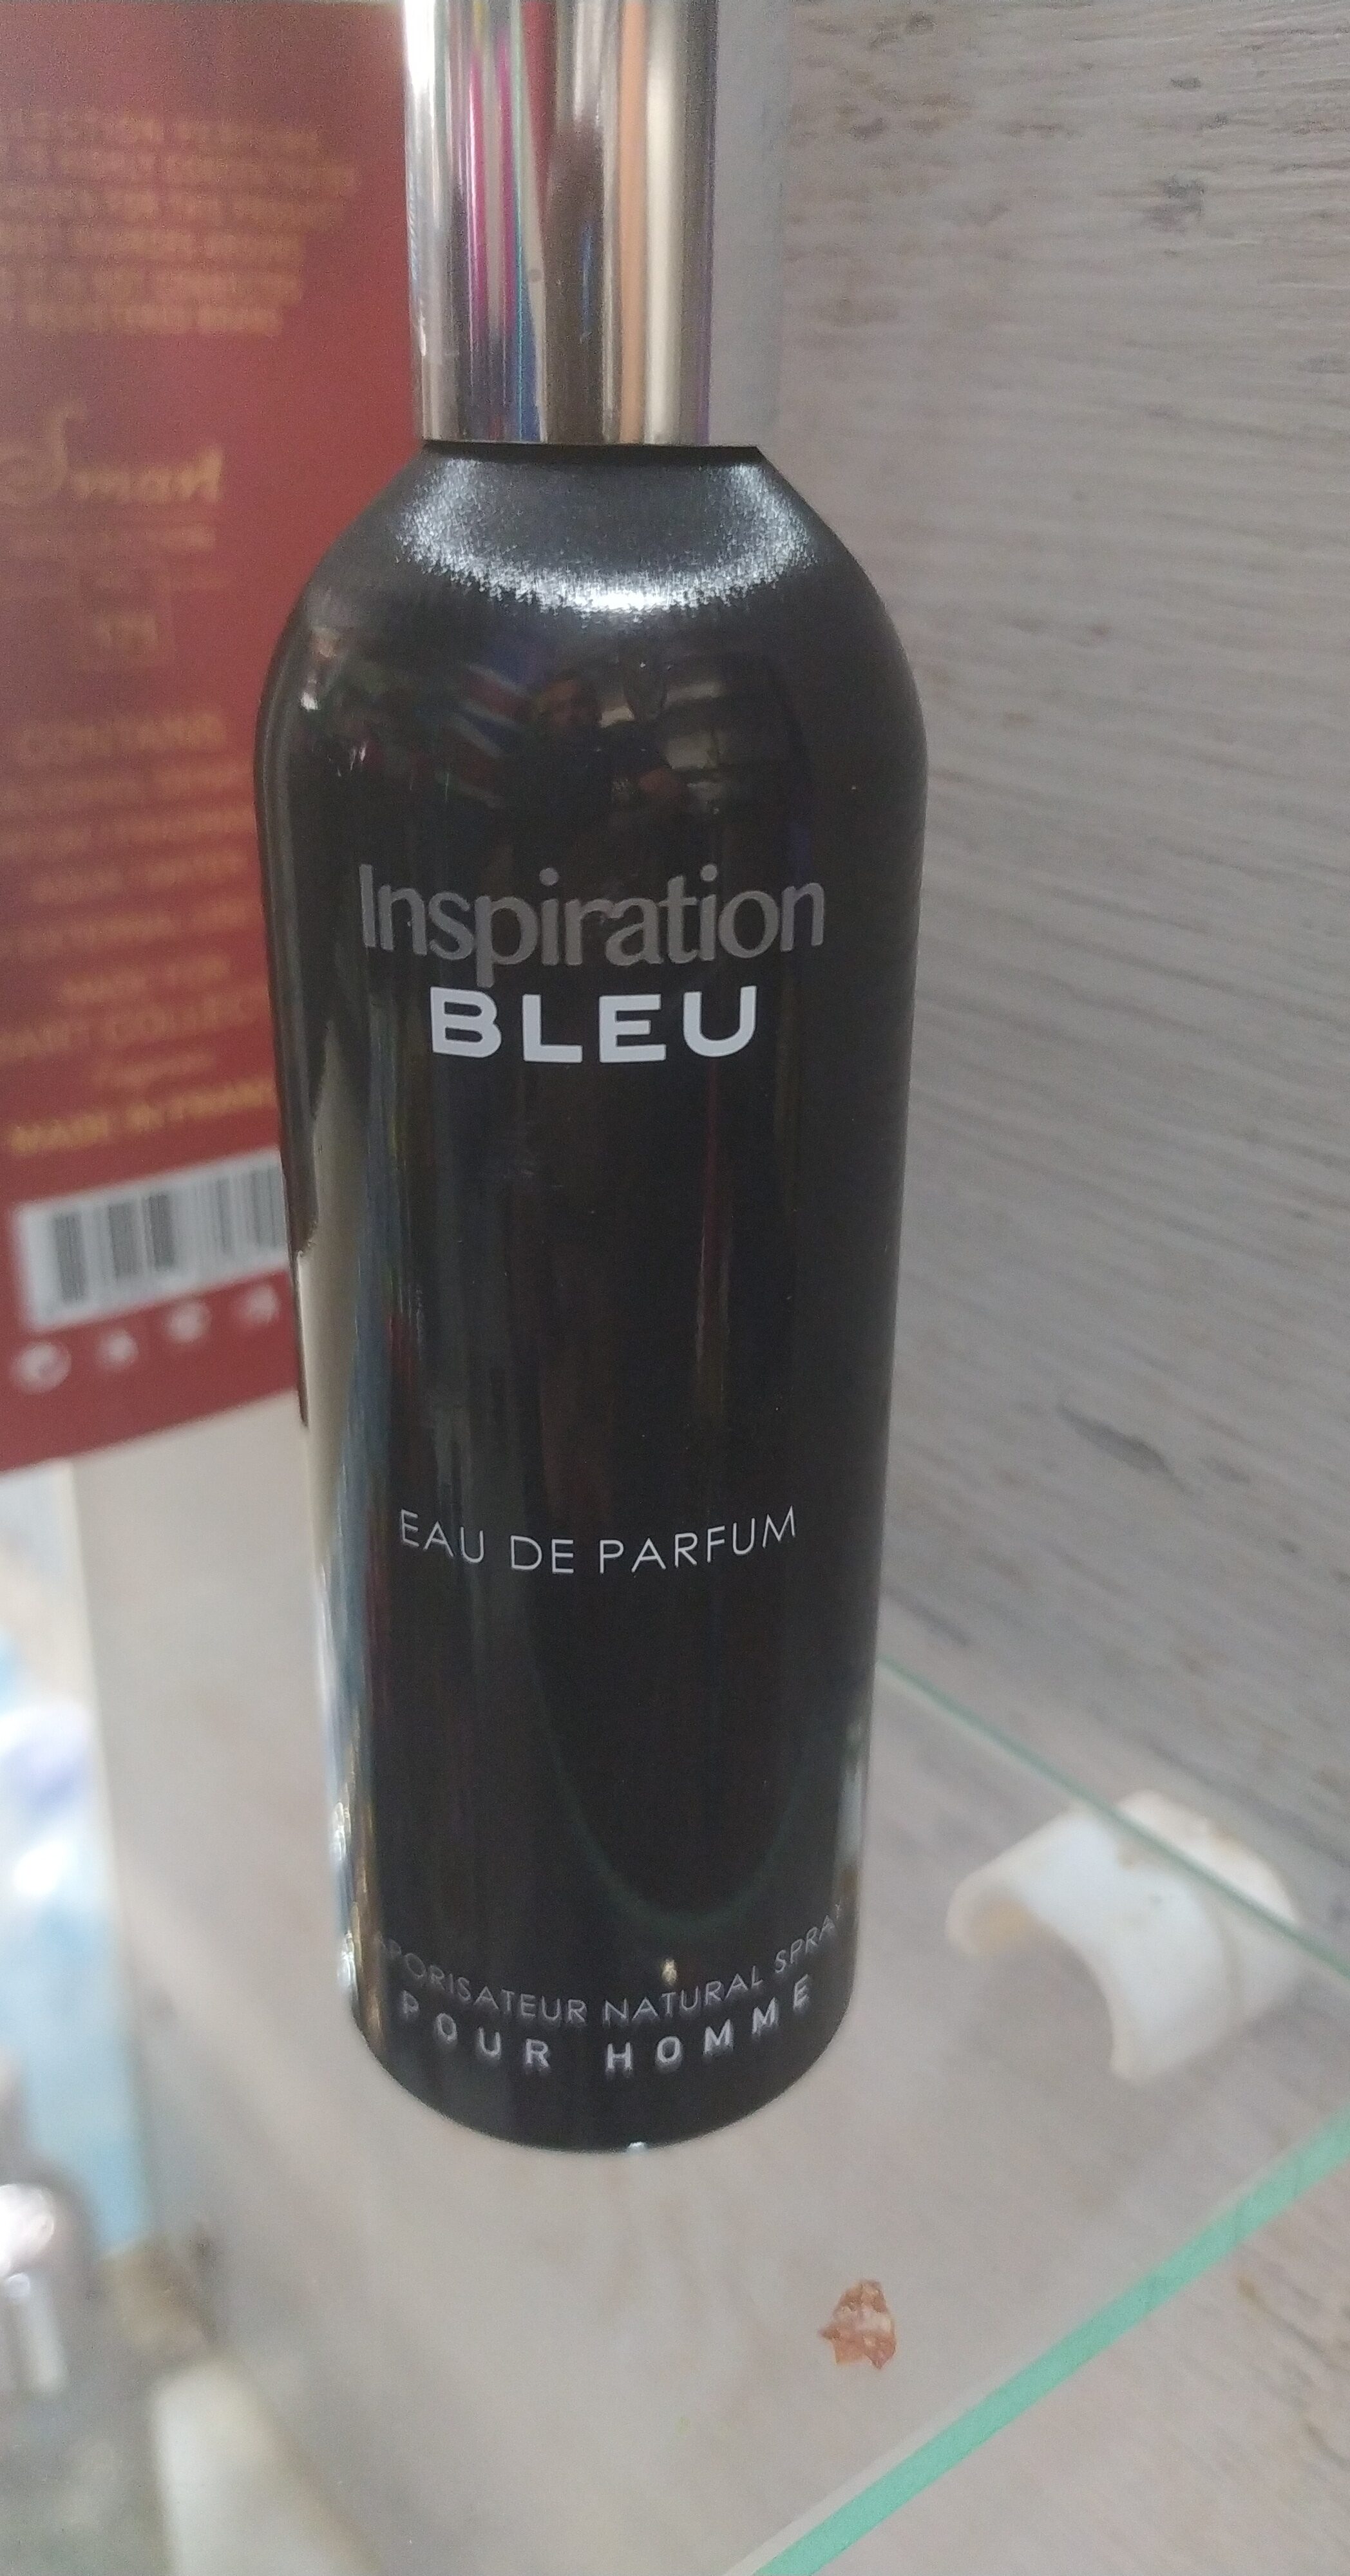 Inspiration bleu - Produit - en